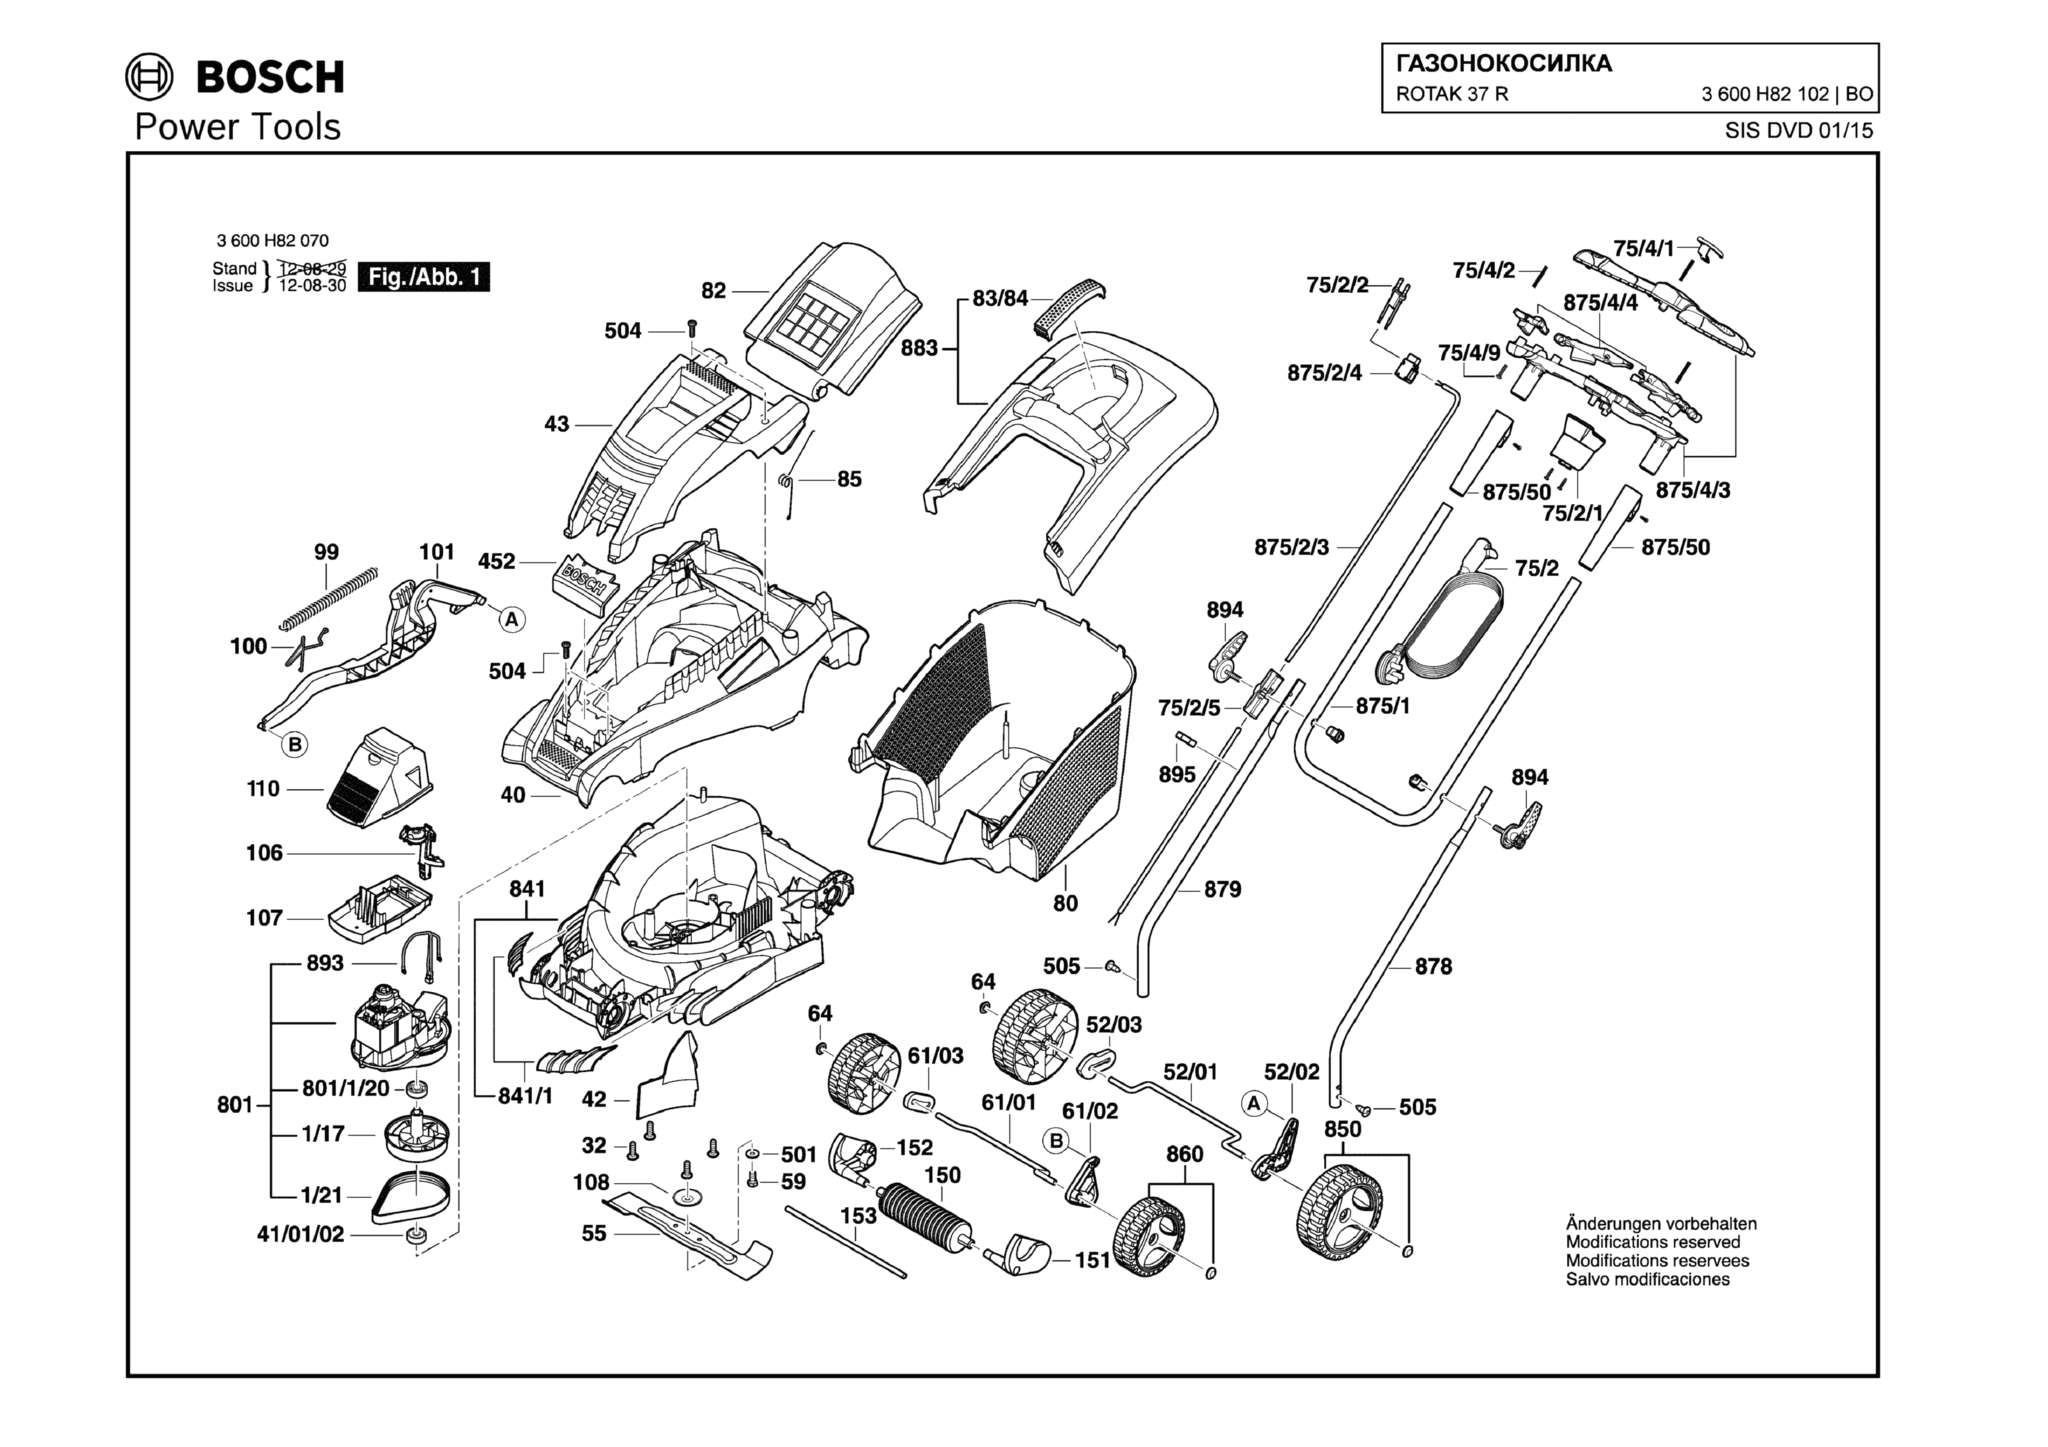 Запчасти, схема и деталировка Bosch ROTAK 37 R (ТИП 3600H82102)